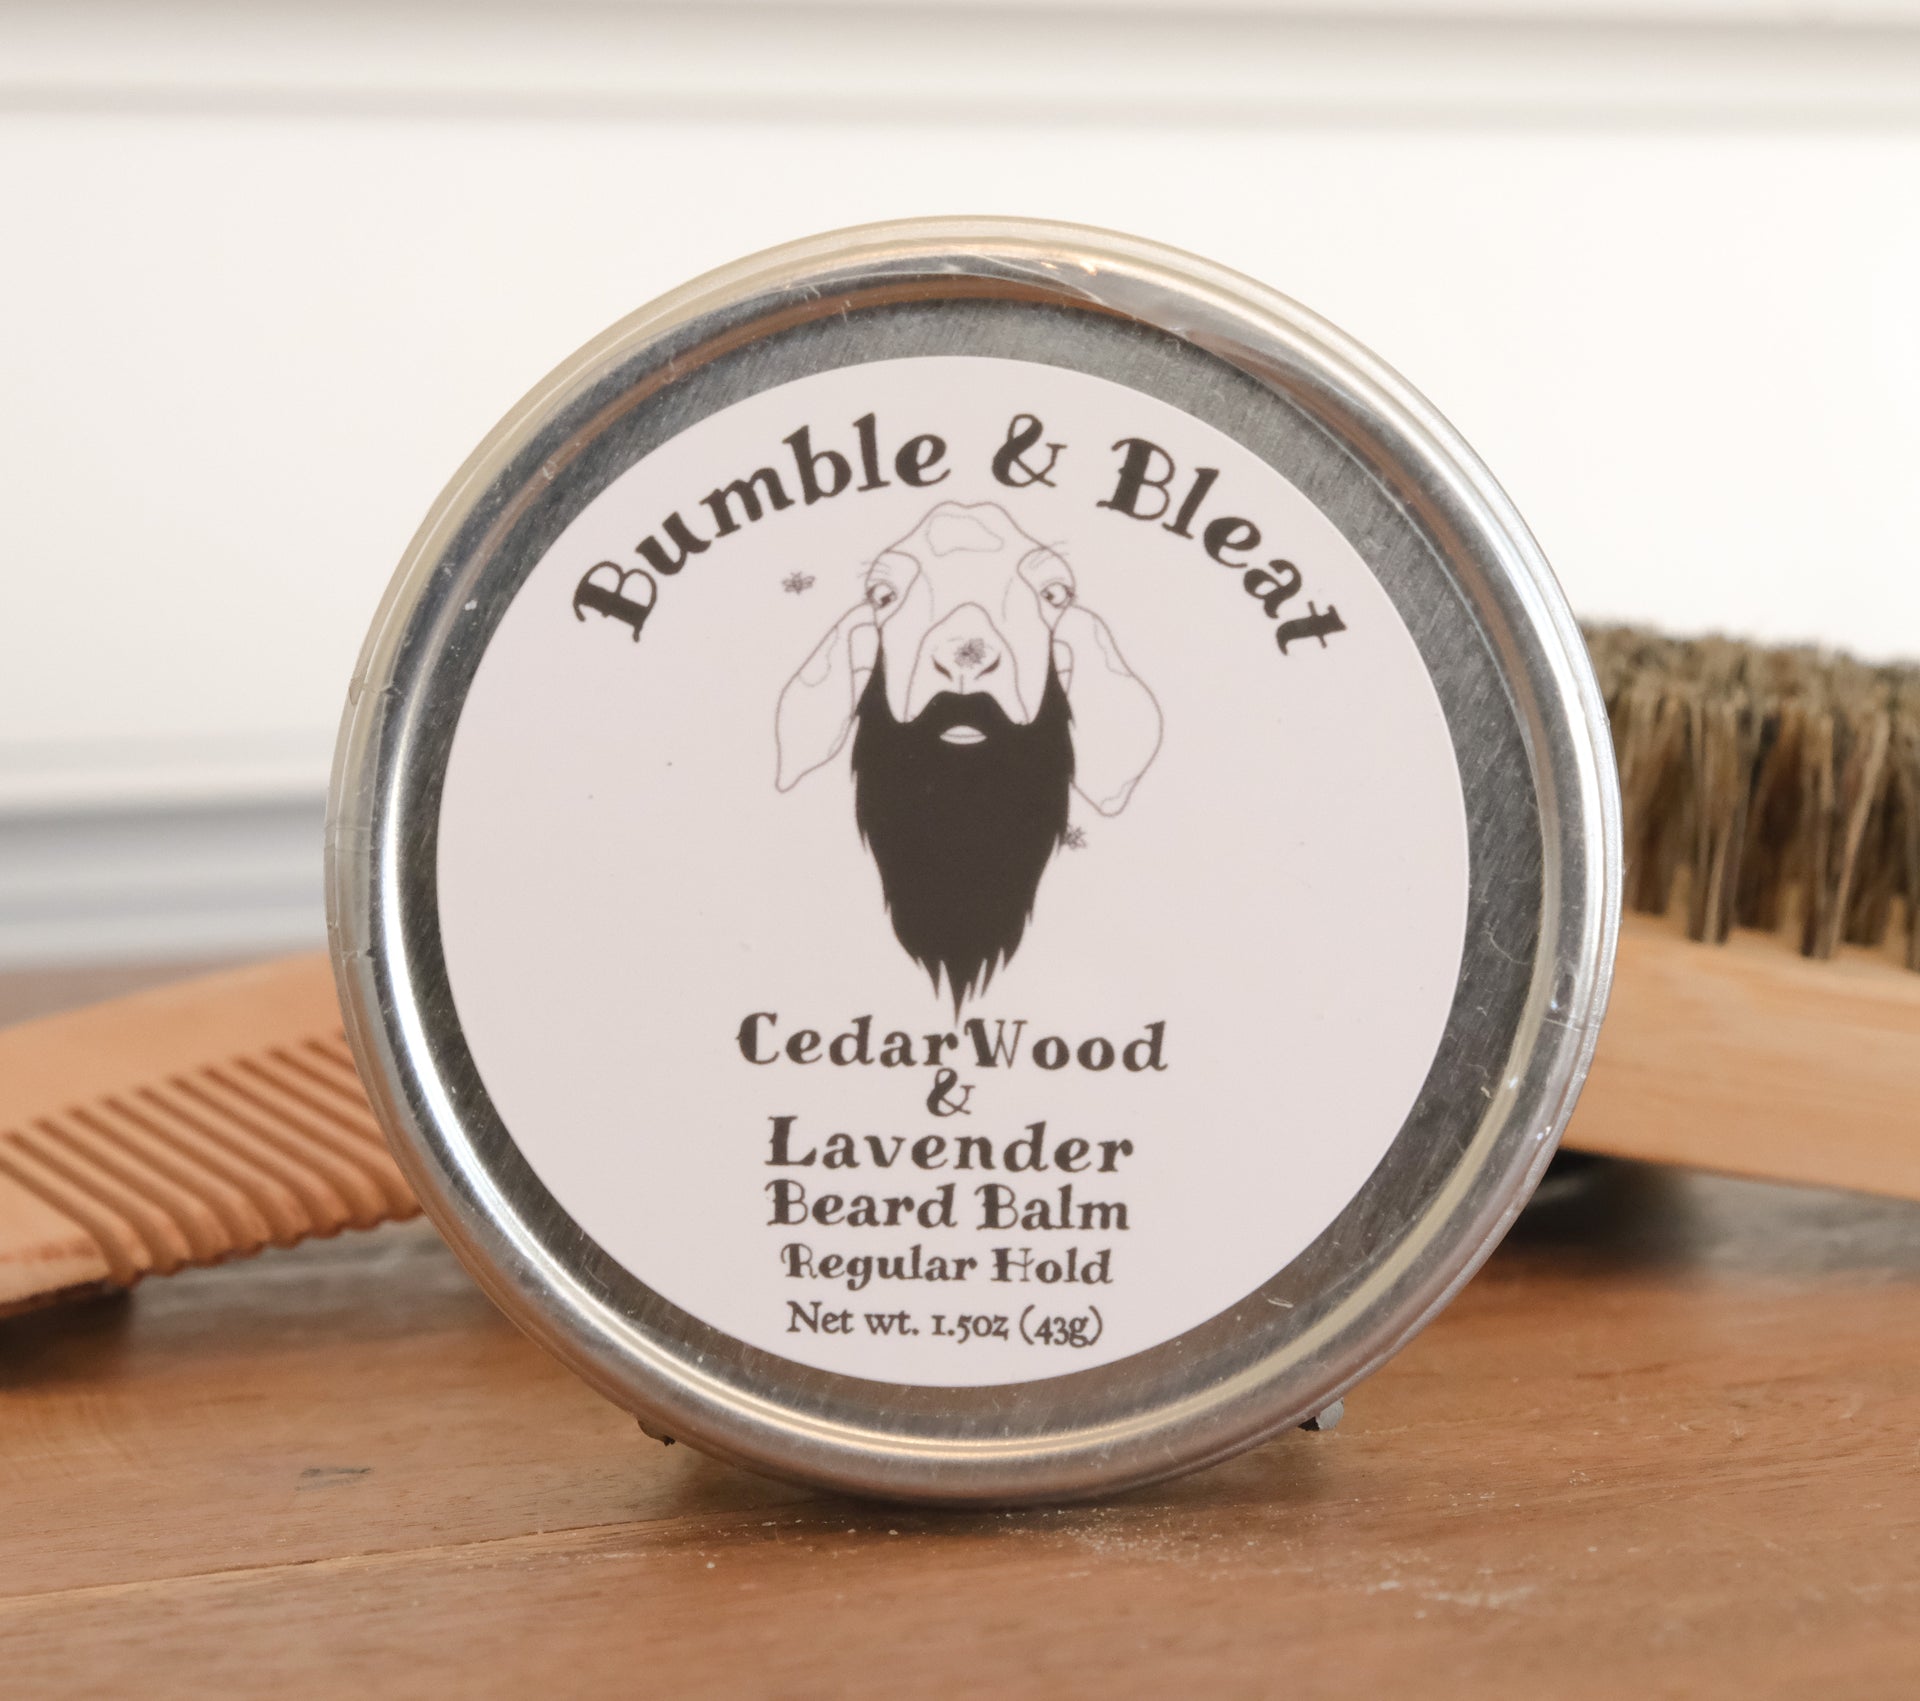 Cedarwood and Lavender Beard Balm